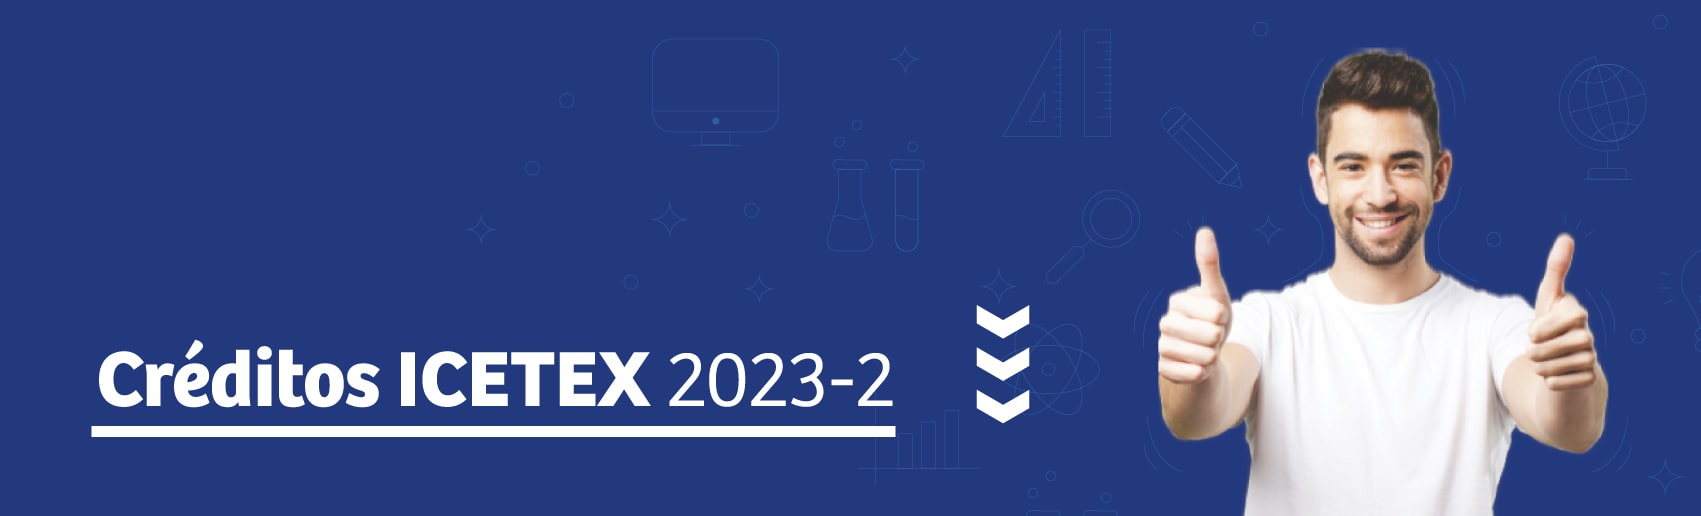 hdr-icetex-2023-min